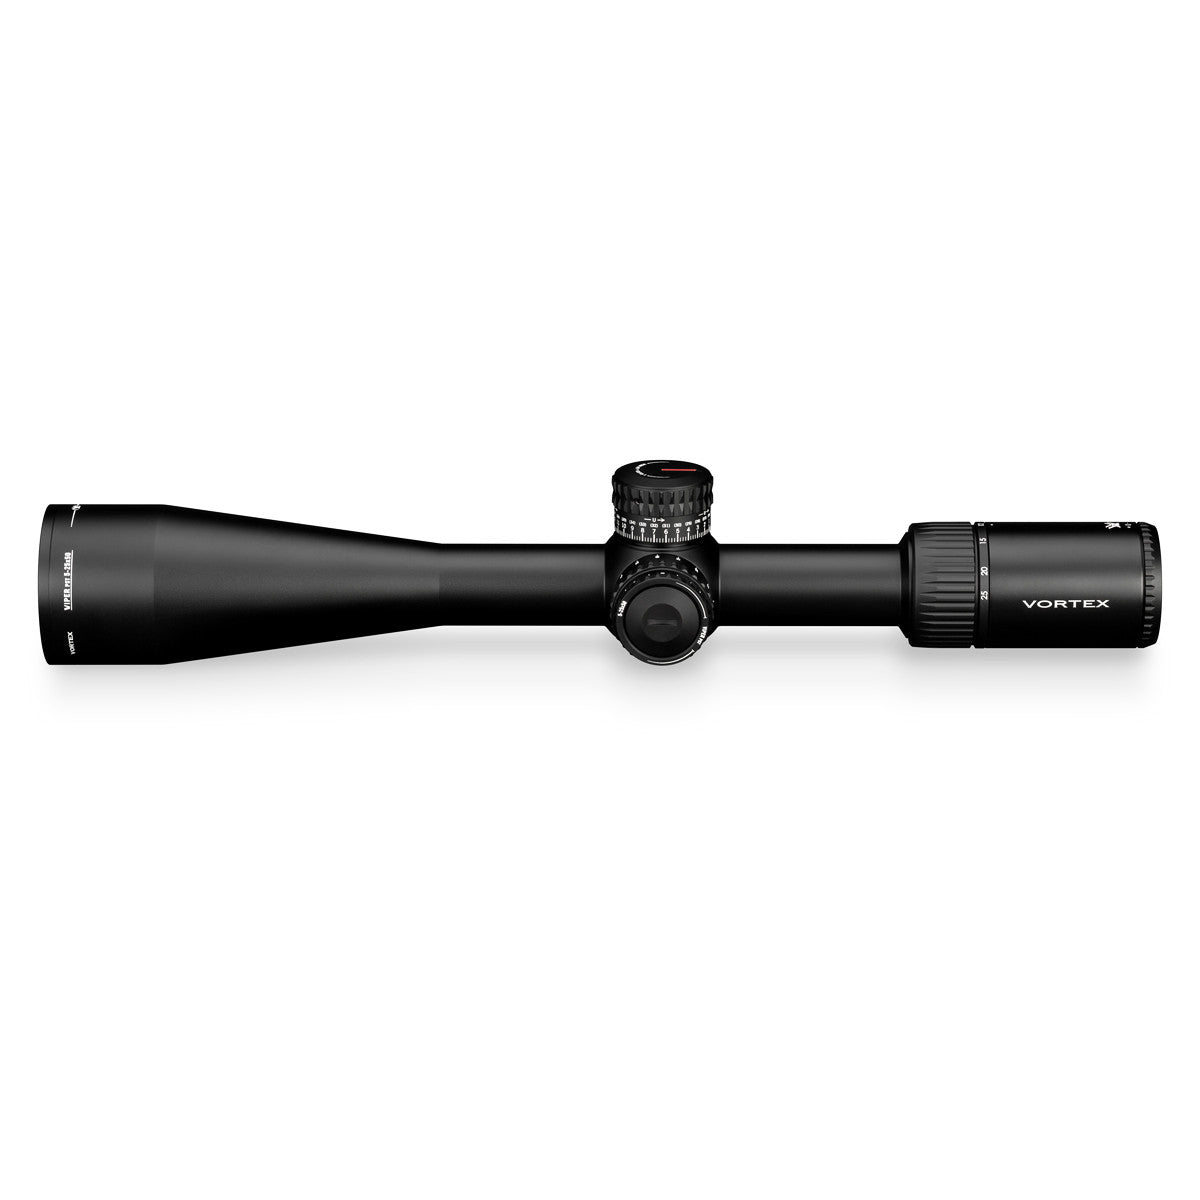 Vortex Viper PST Gen II 5-25x50 FFP Riflescope (NOT ACTIVE) in Vortex Viper PST Gen II 5-25x50 FFP Riflescope (NOT ACTIVE) - goHUNT Shop by GOHUNT | Vortex Optics - GOHUNT Shop